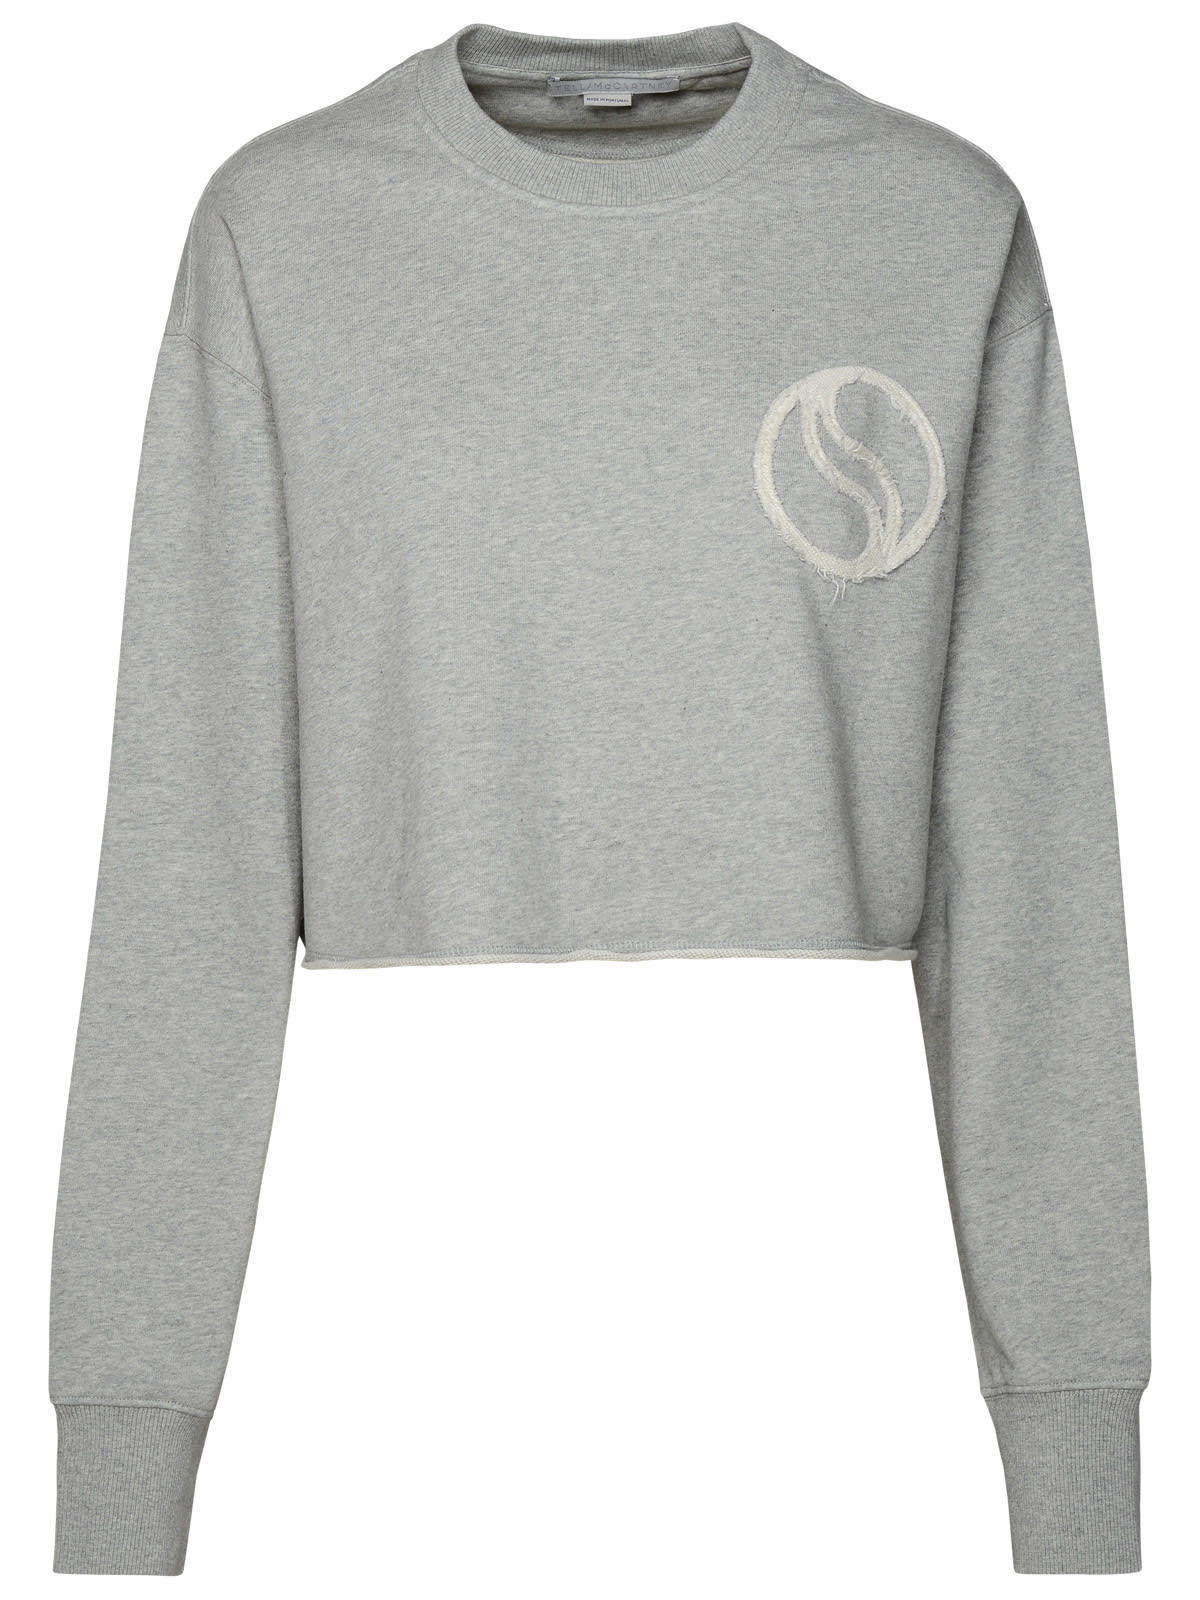 Stella McCartney's-wave Grey Organic Cotton Sweatshirt